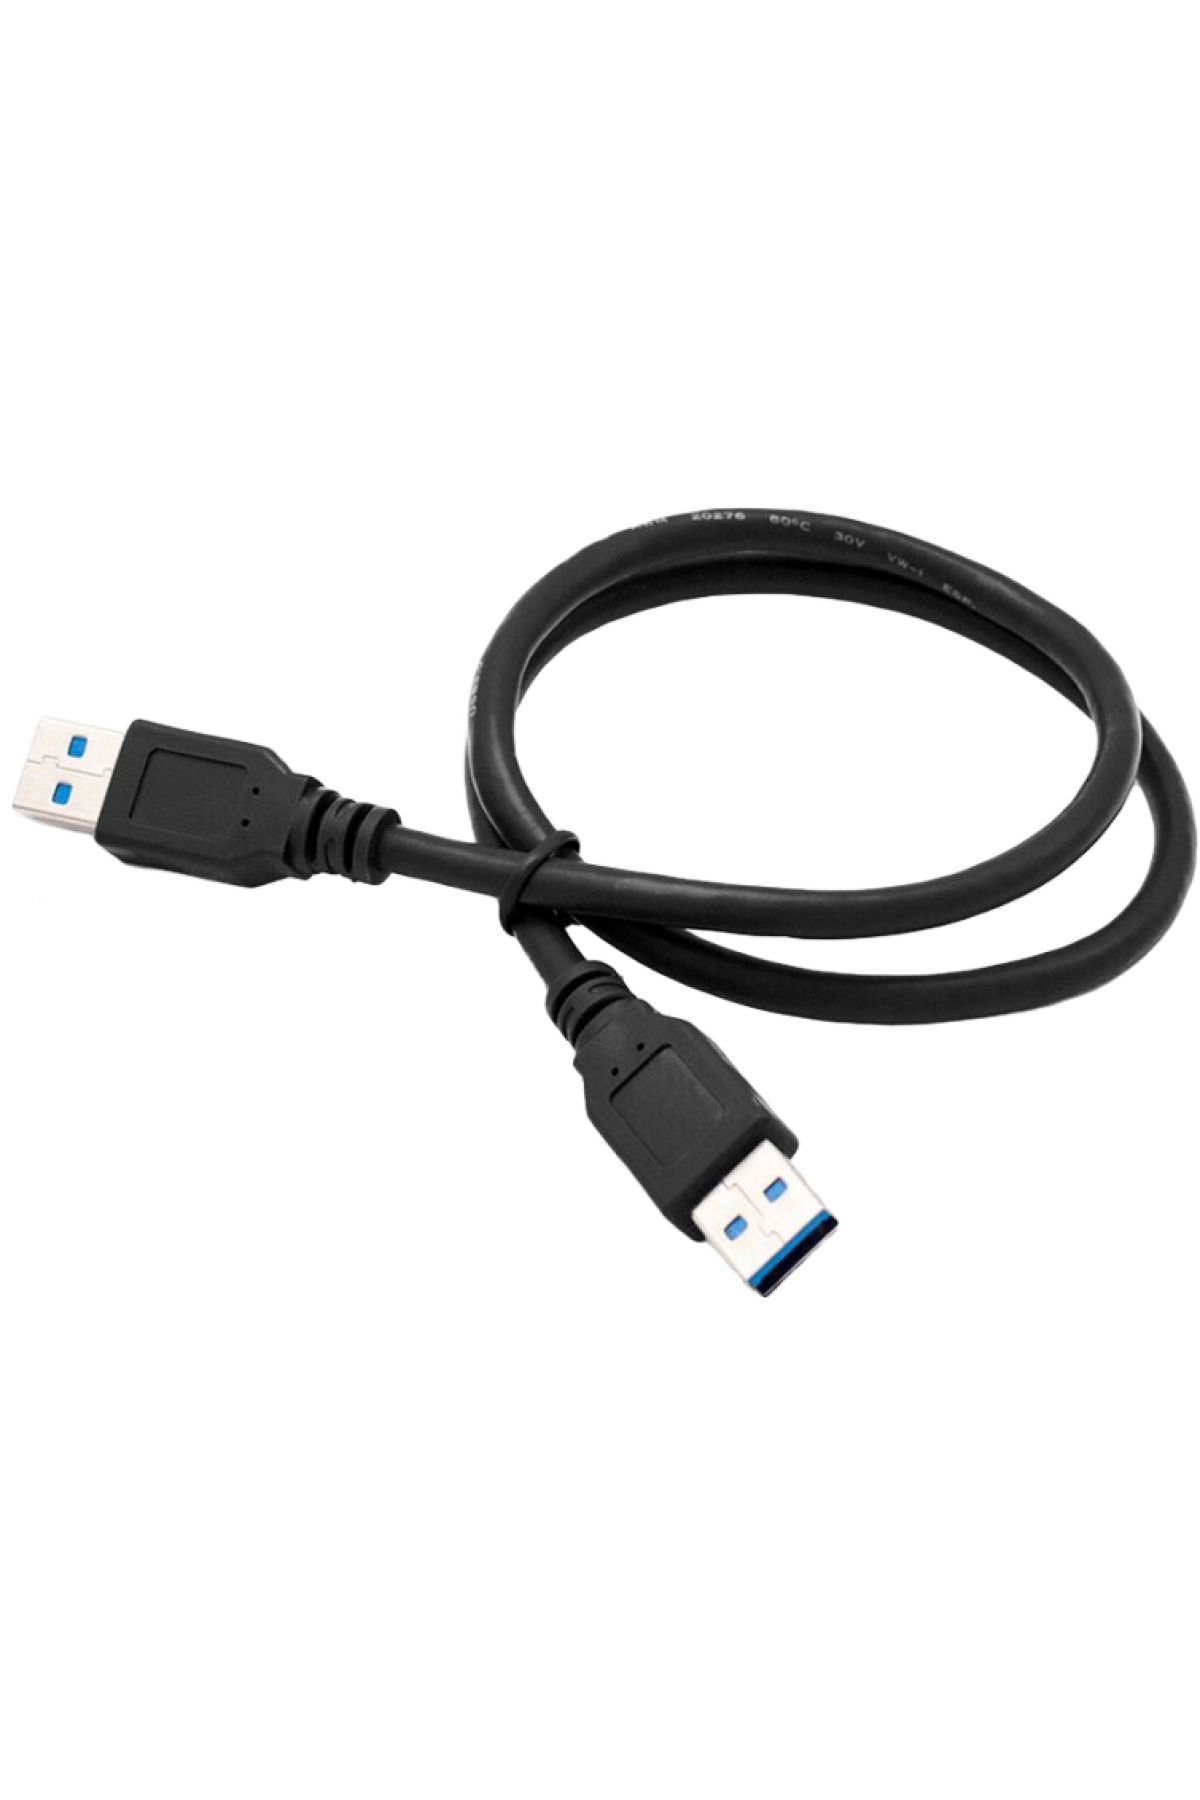 jetucuzal Concord C-5601 1.5 Metre USB to Usb Kablo Laptop Soğutucu Hdd Kutu Taşınabilir Disk Kablo